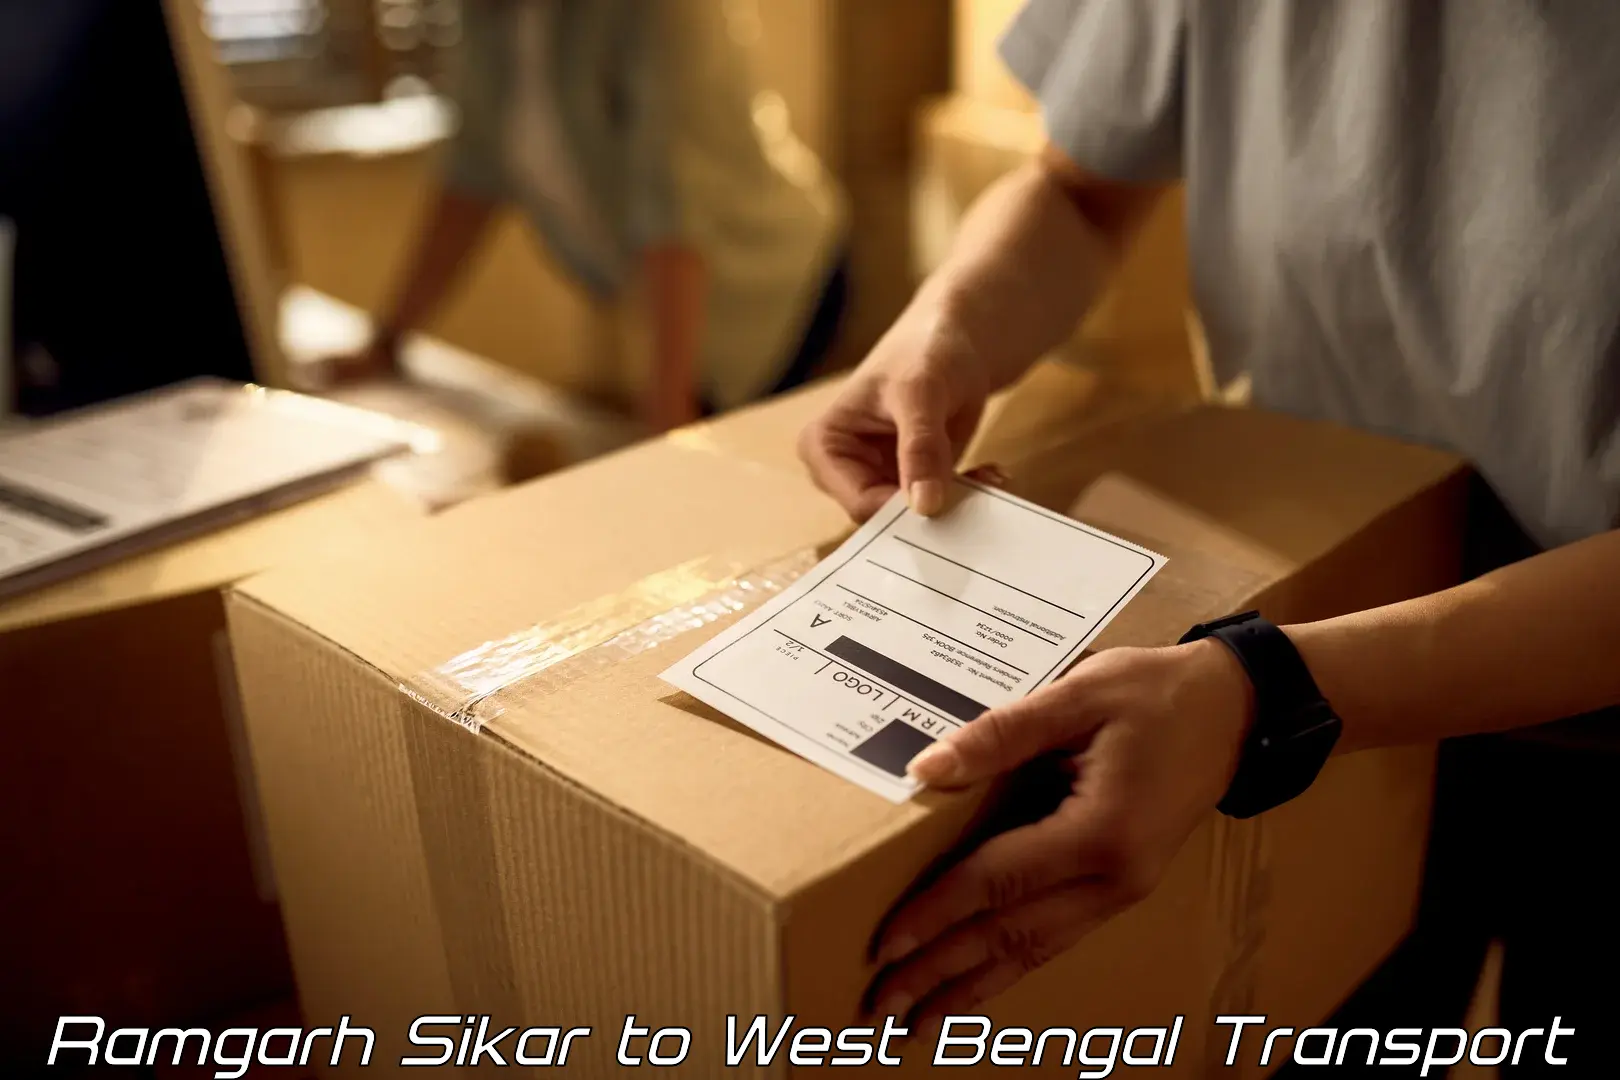 Goods delivery service Ramgarh Sikar to Dakshin Barasat